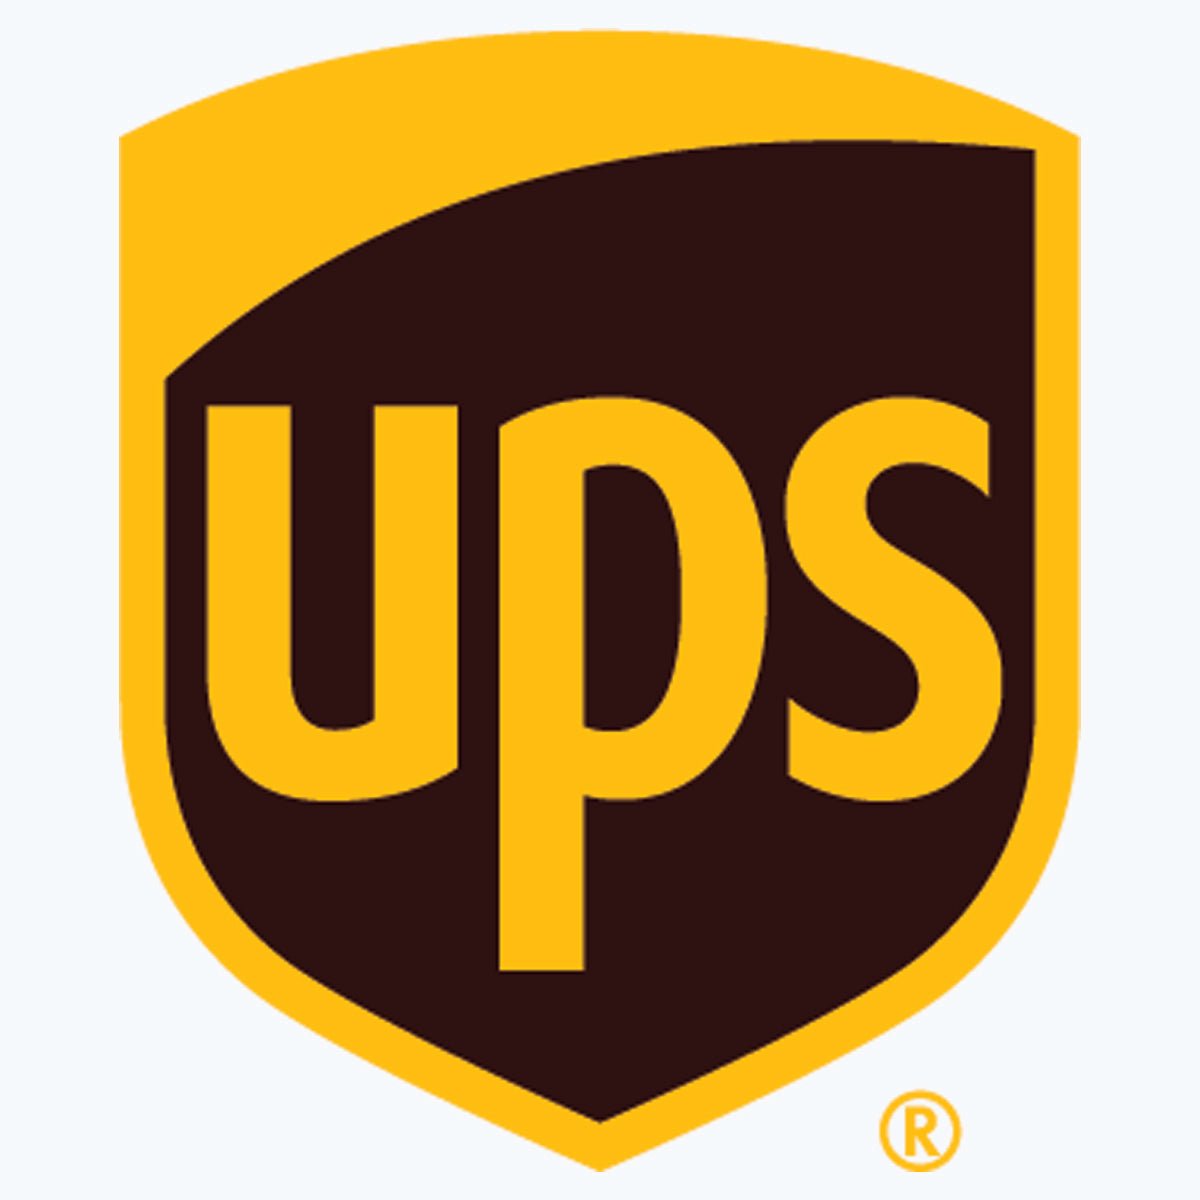 United Parcel Service, Inc. (“UPS”)